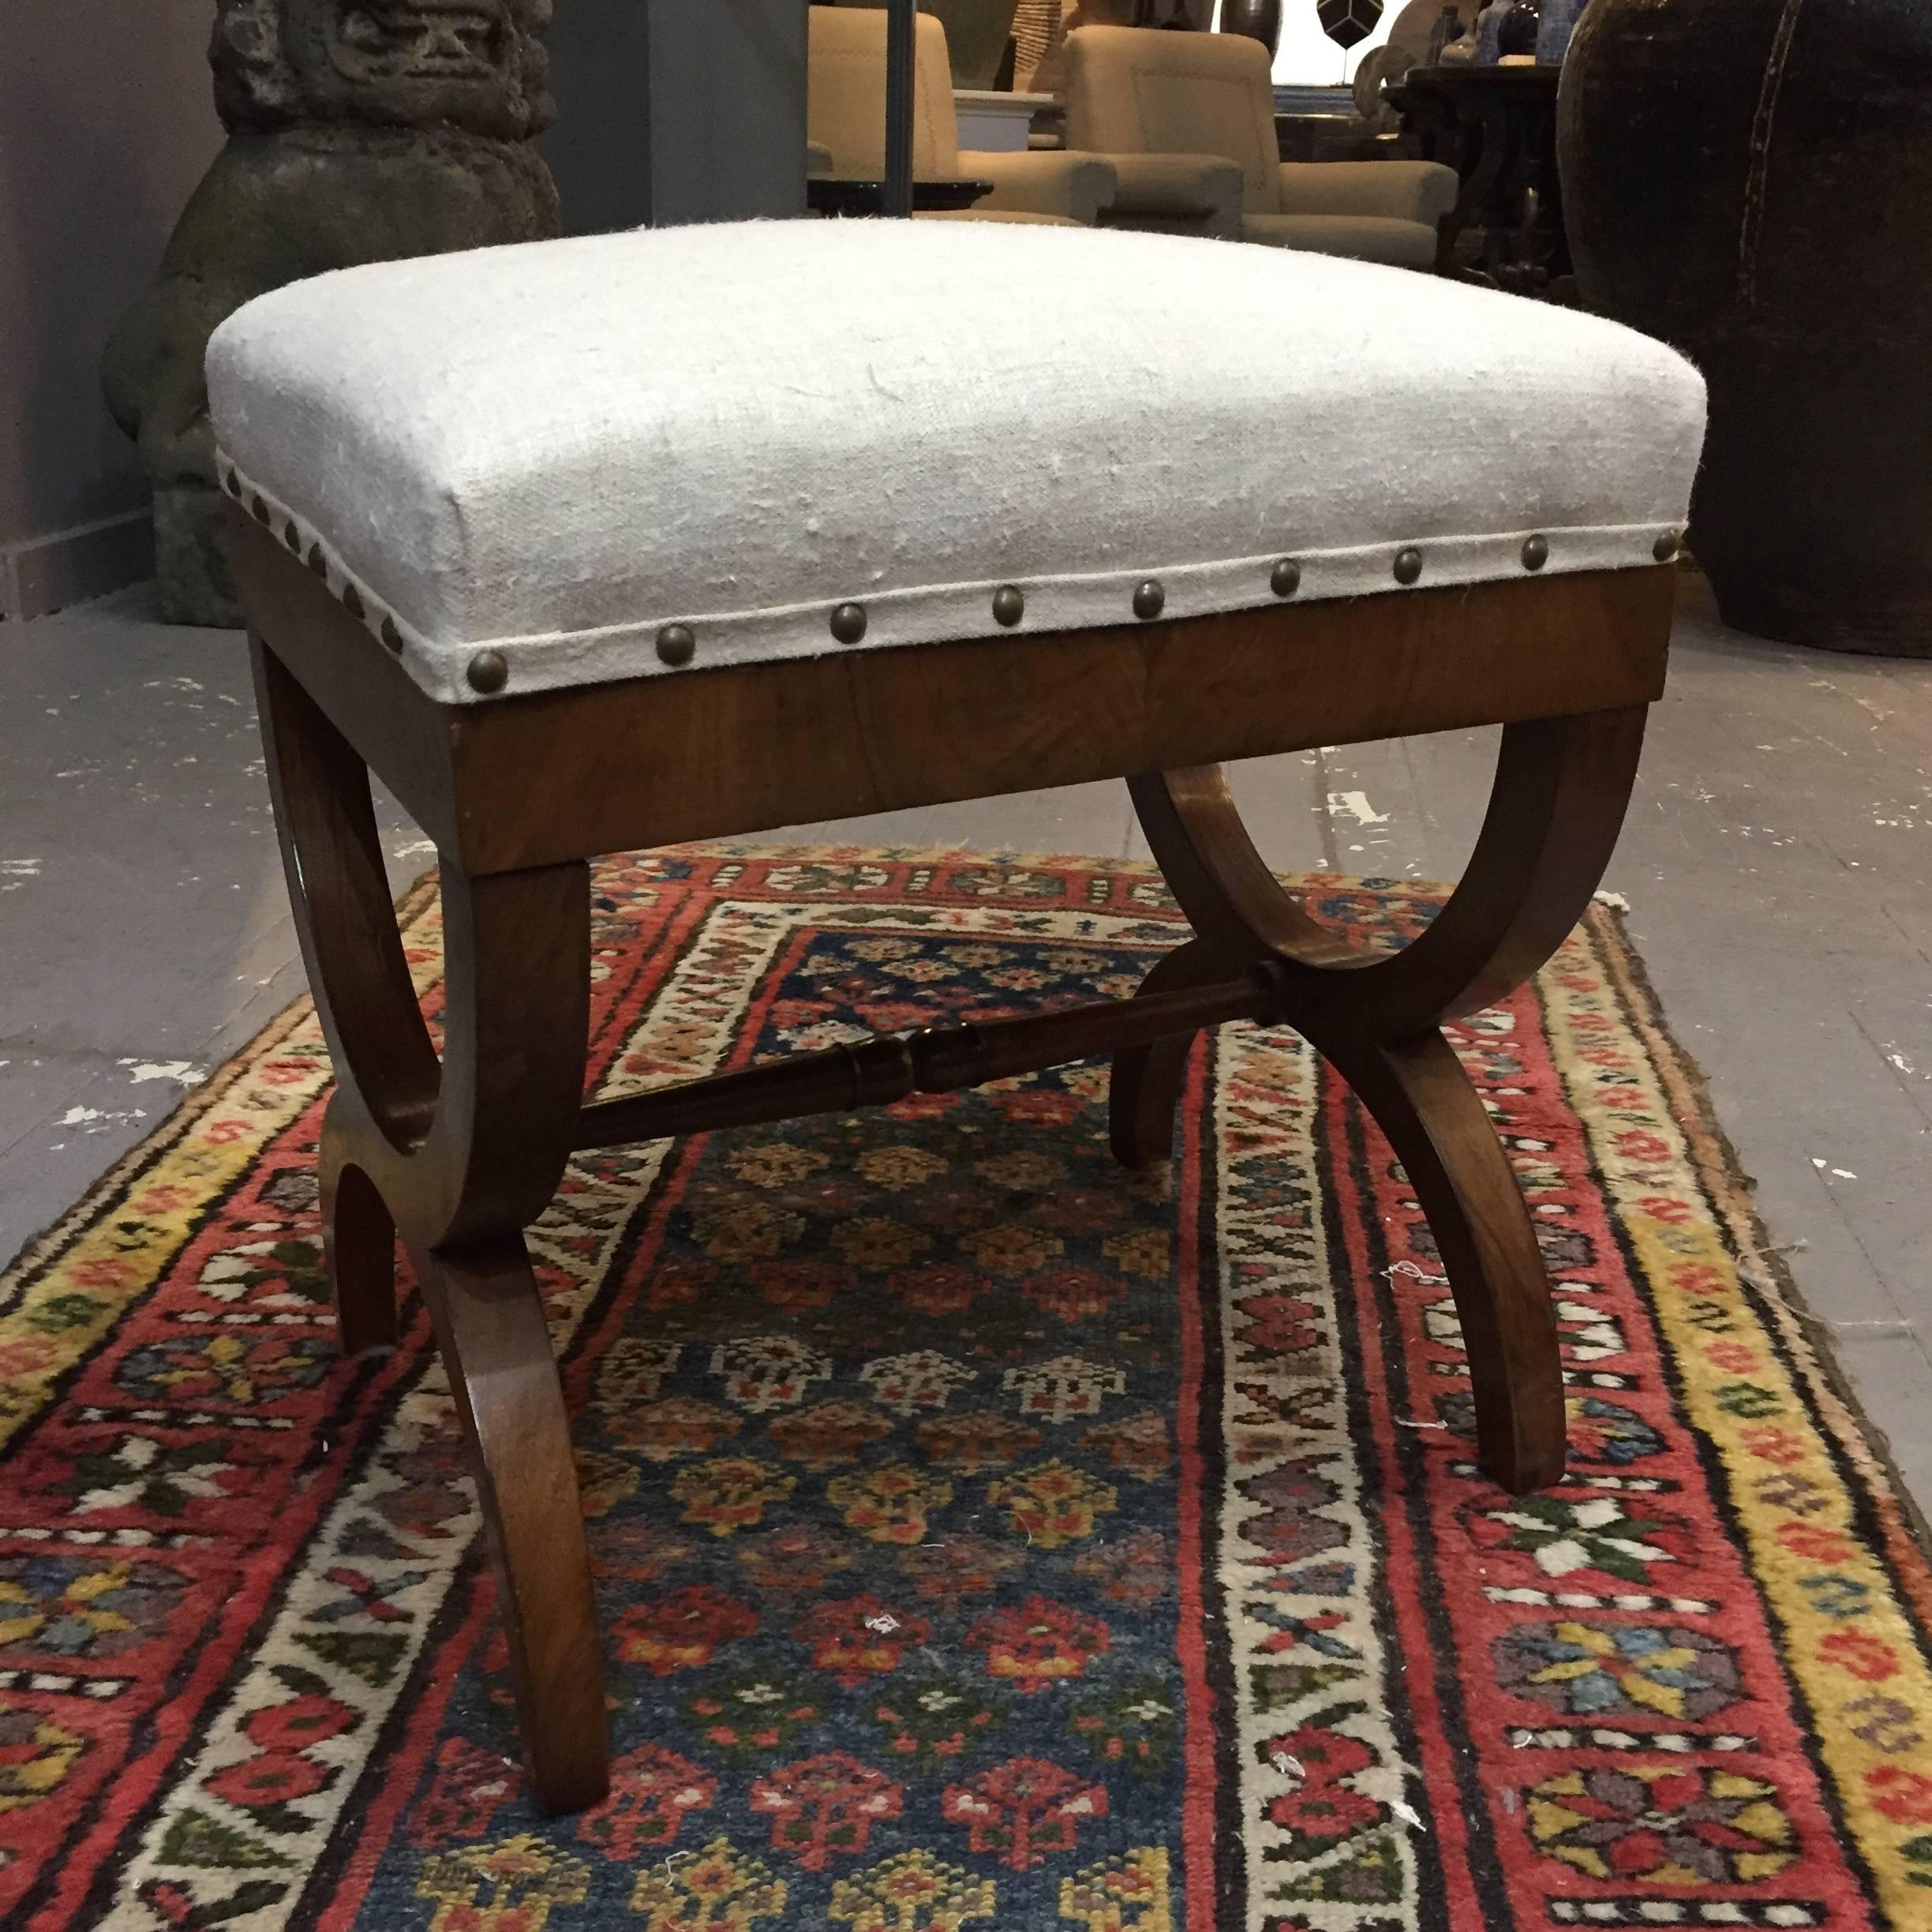 Italian Classic pair U shaped walnut framed foot stools, circa 1820.
Recently reupholstered in vintage homespun linen.